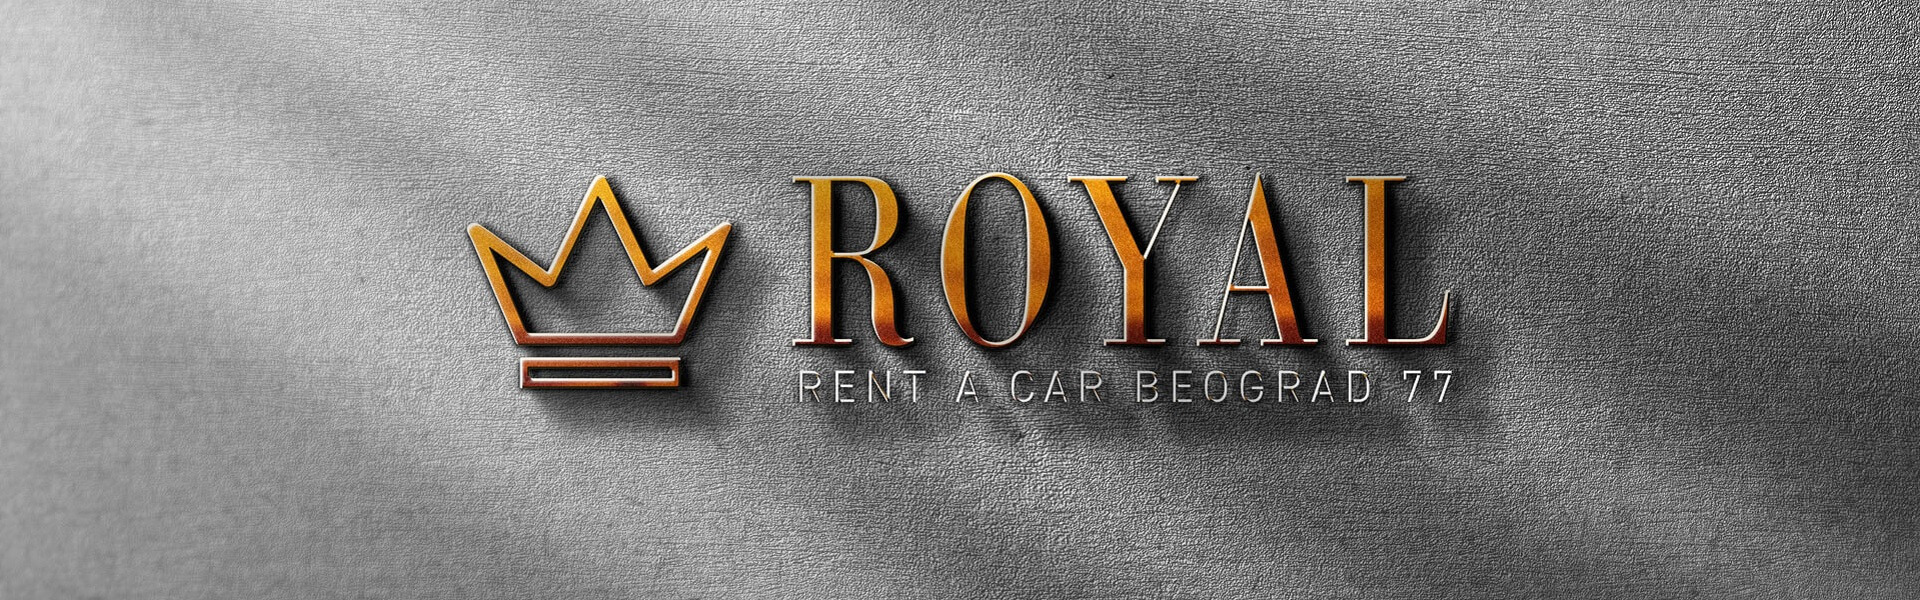 Renault delovi | Car rental Beograd Royal